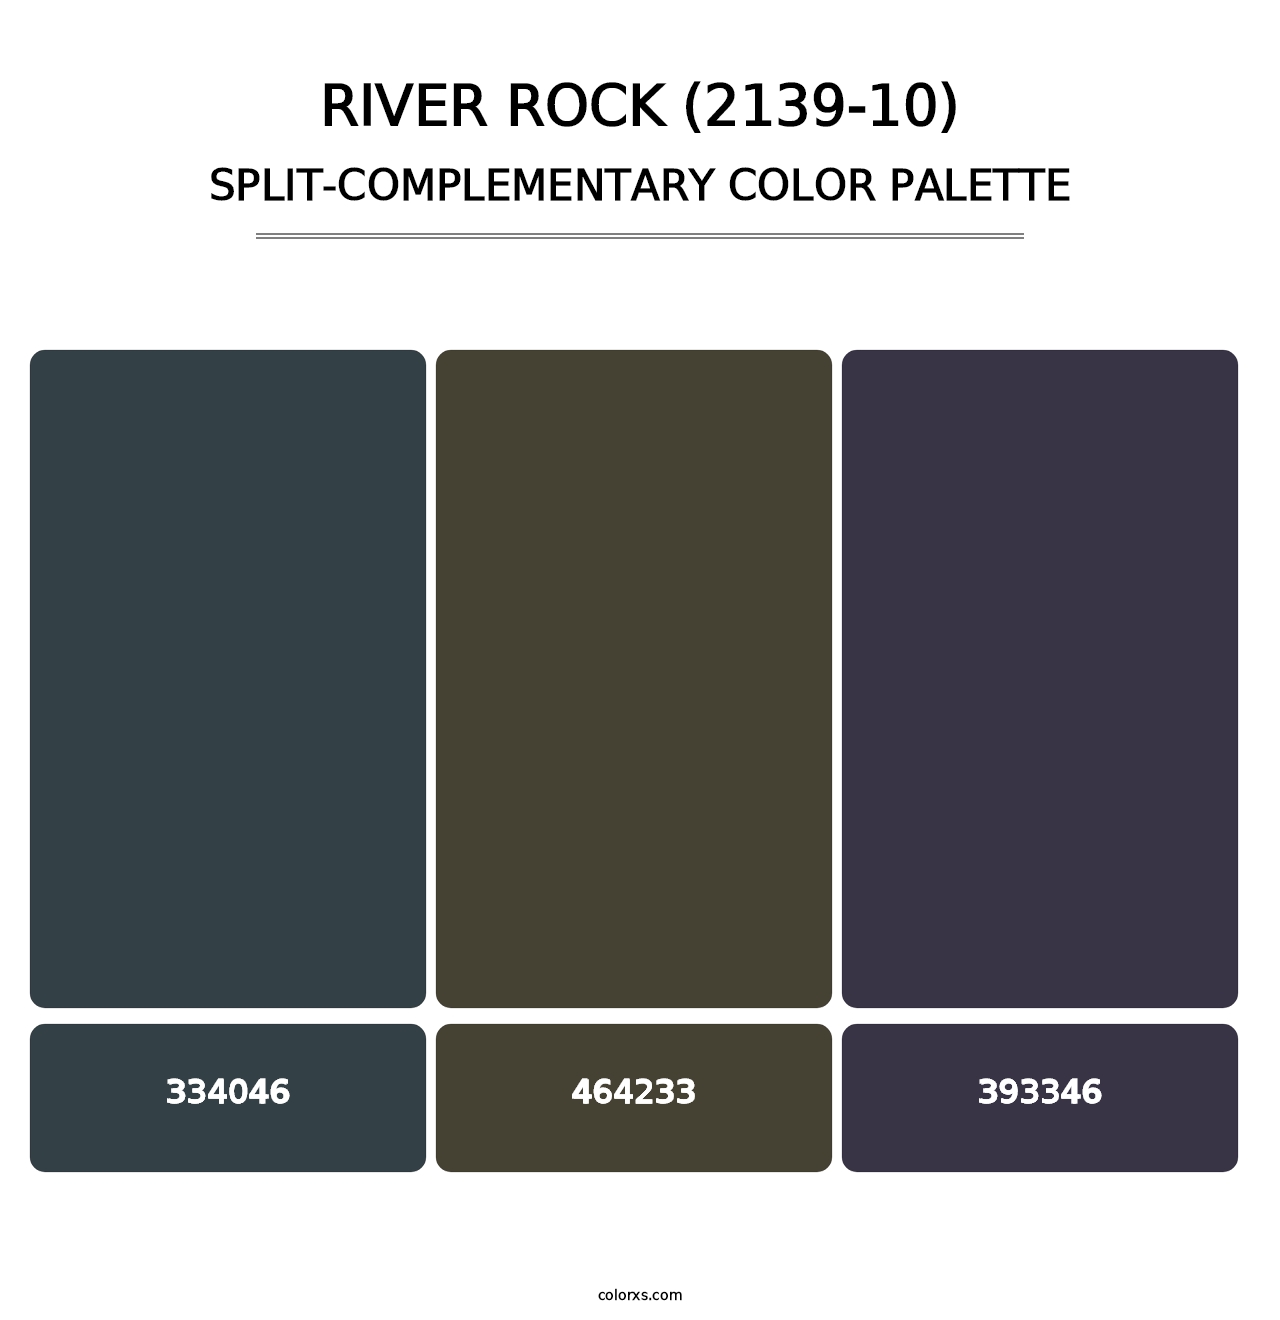 River Rock (2139-10) - Split-Complementary Color Palette